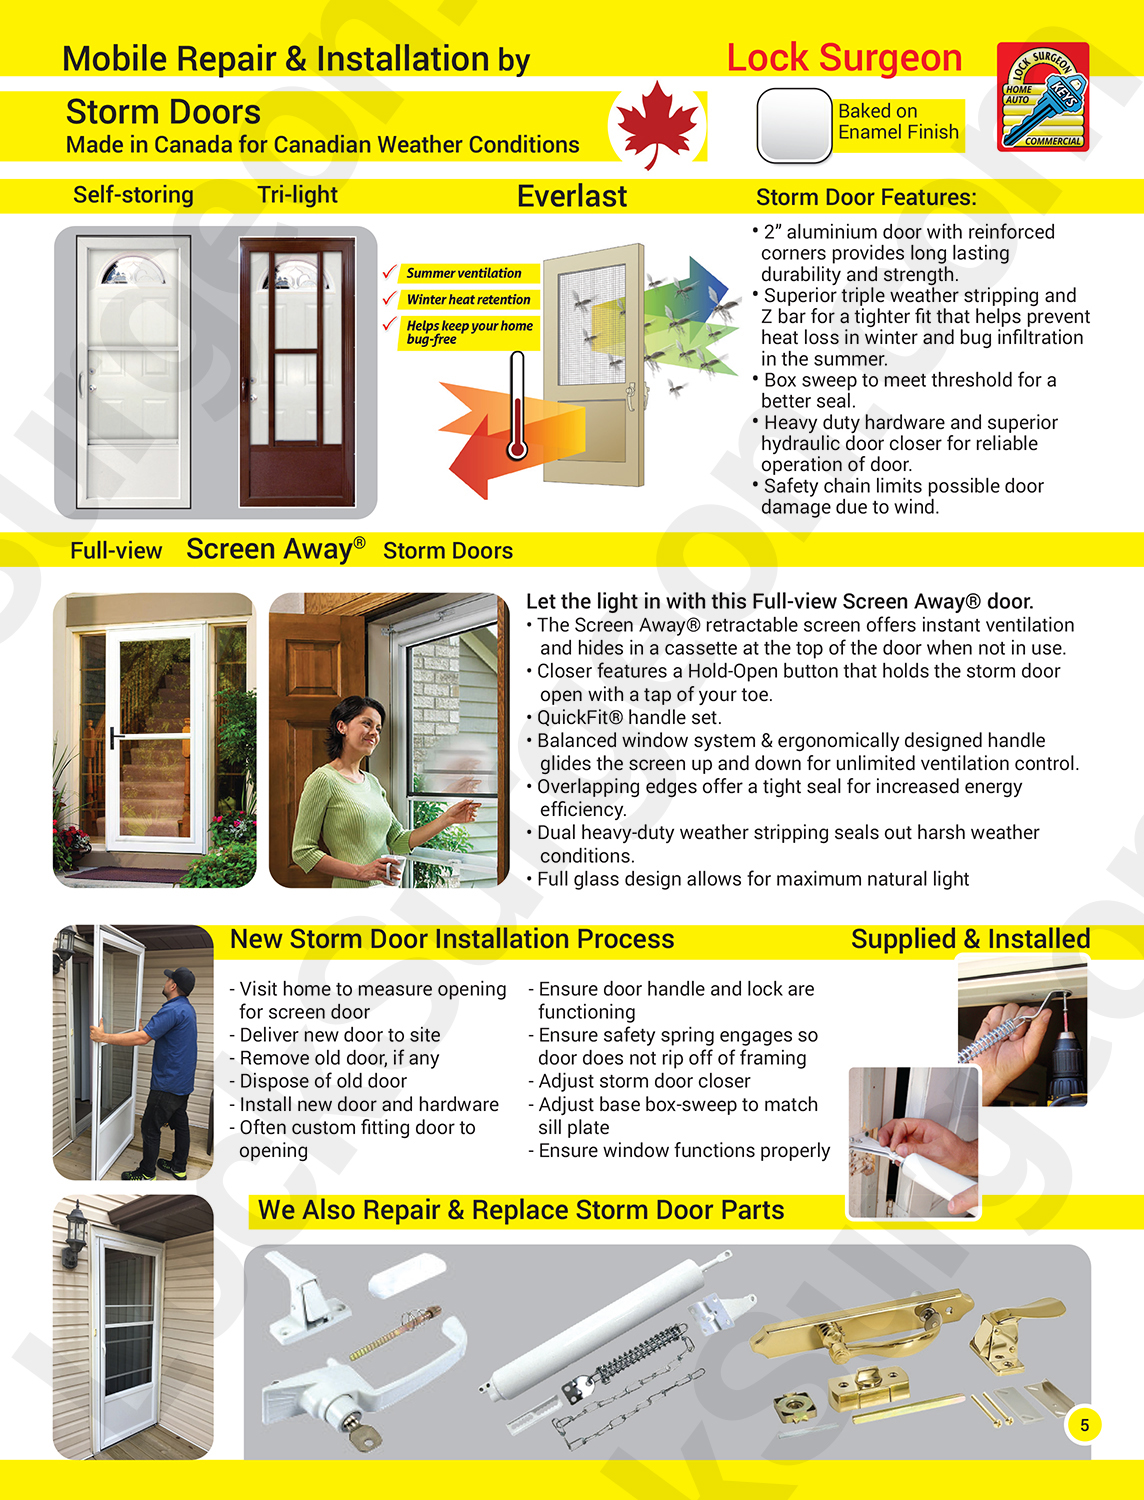 Residential storm door repair, adjustments, security, sales & installations.